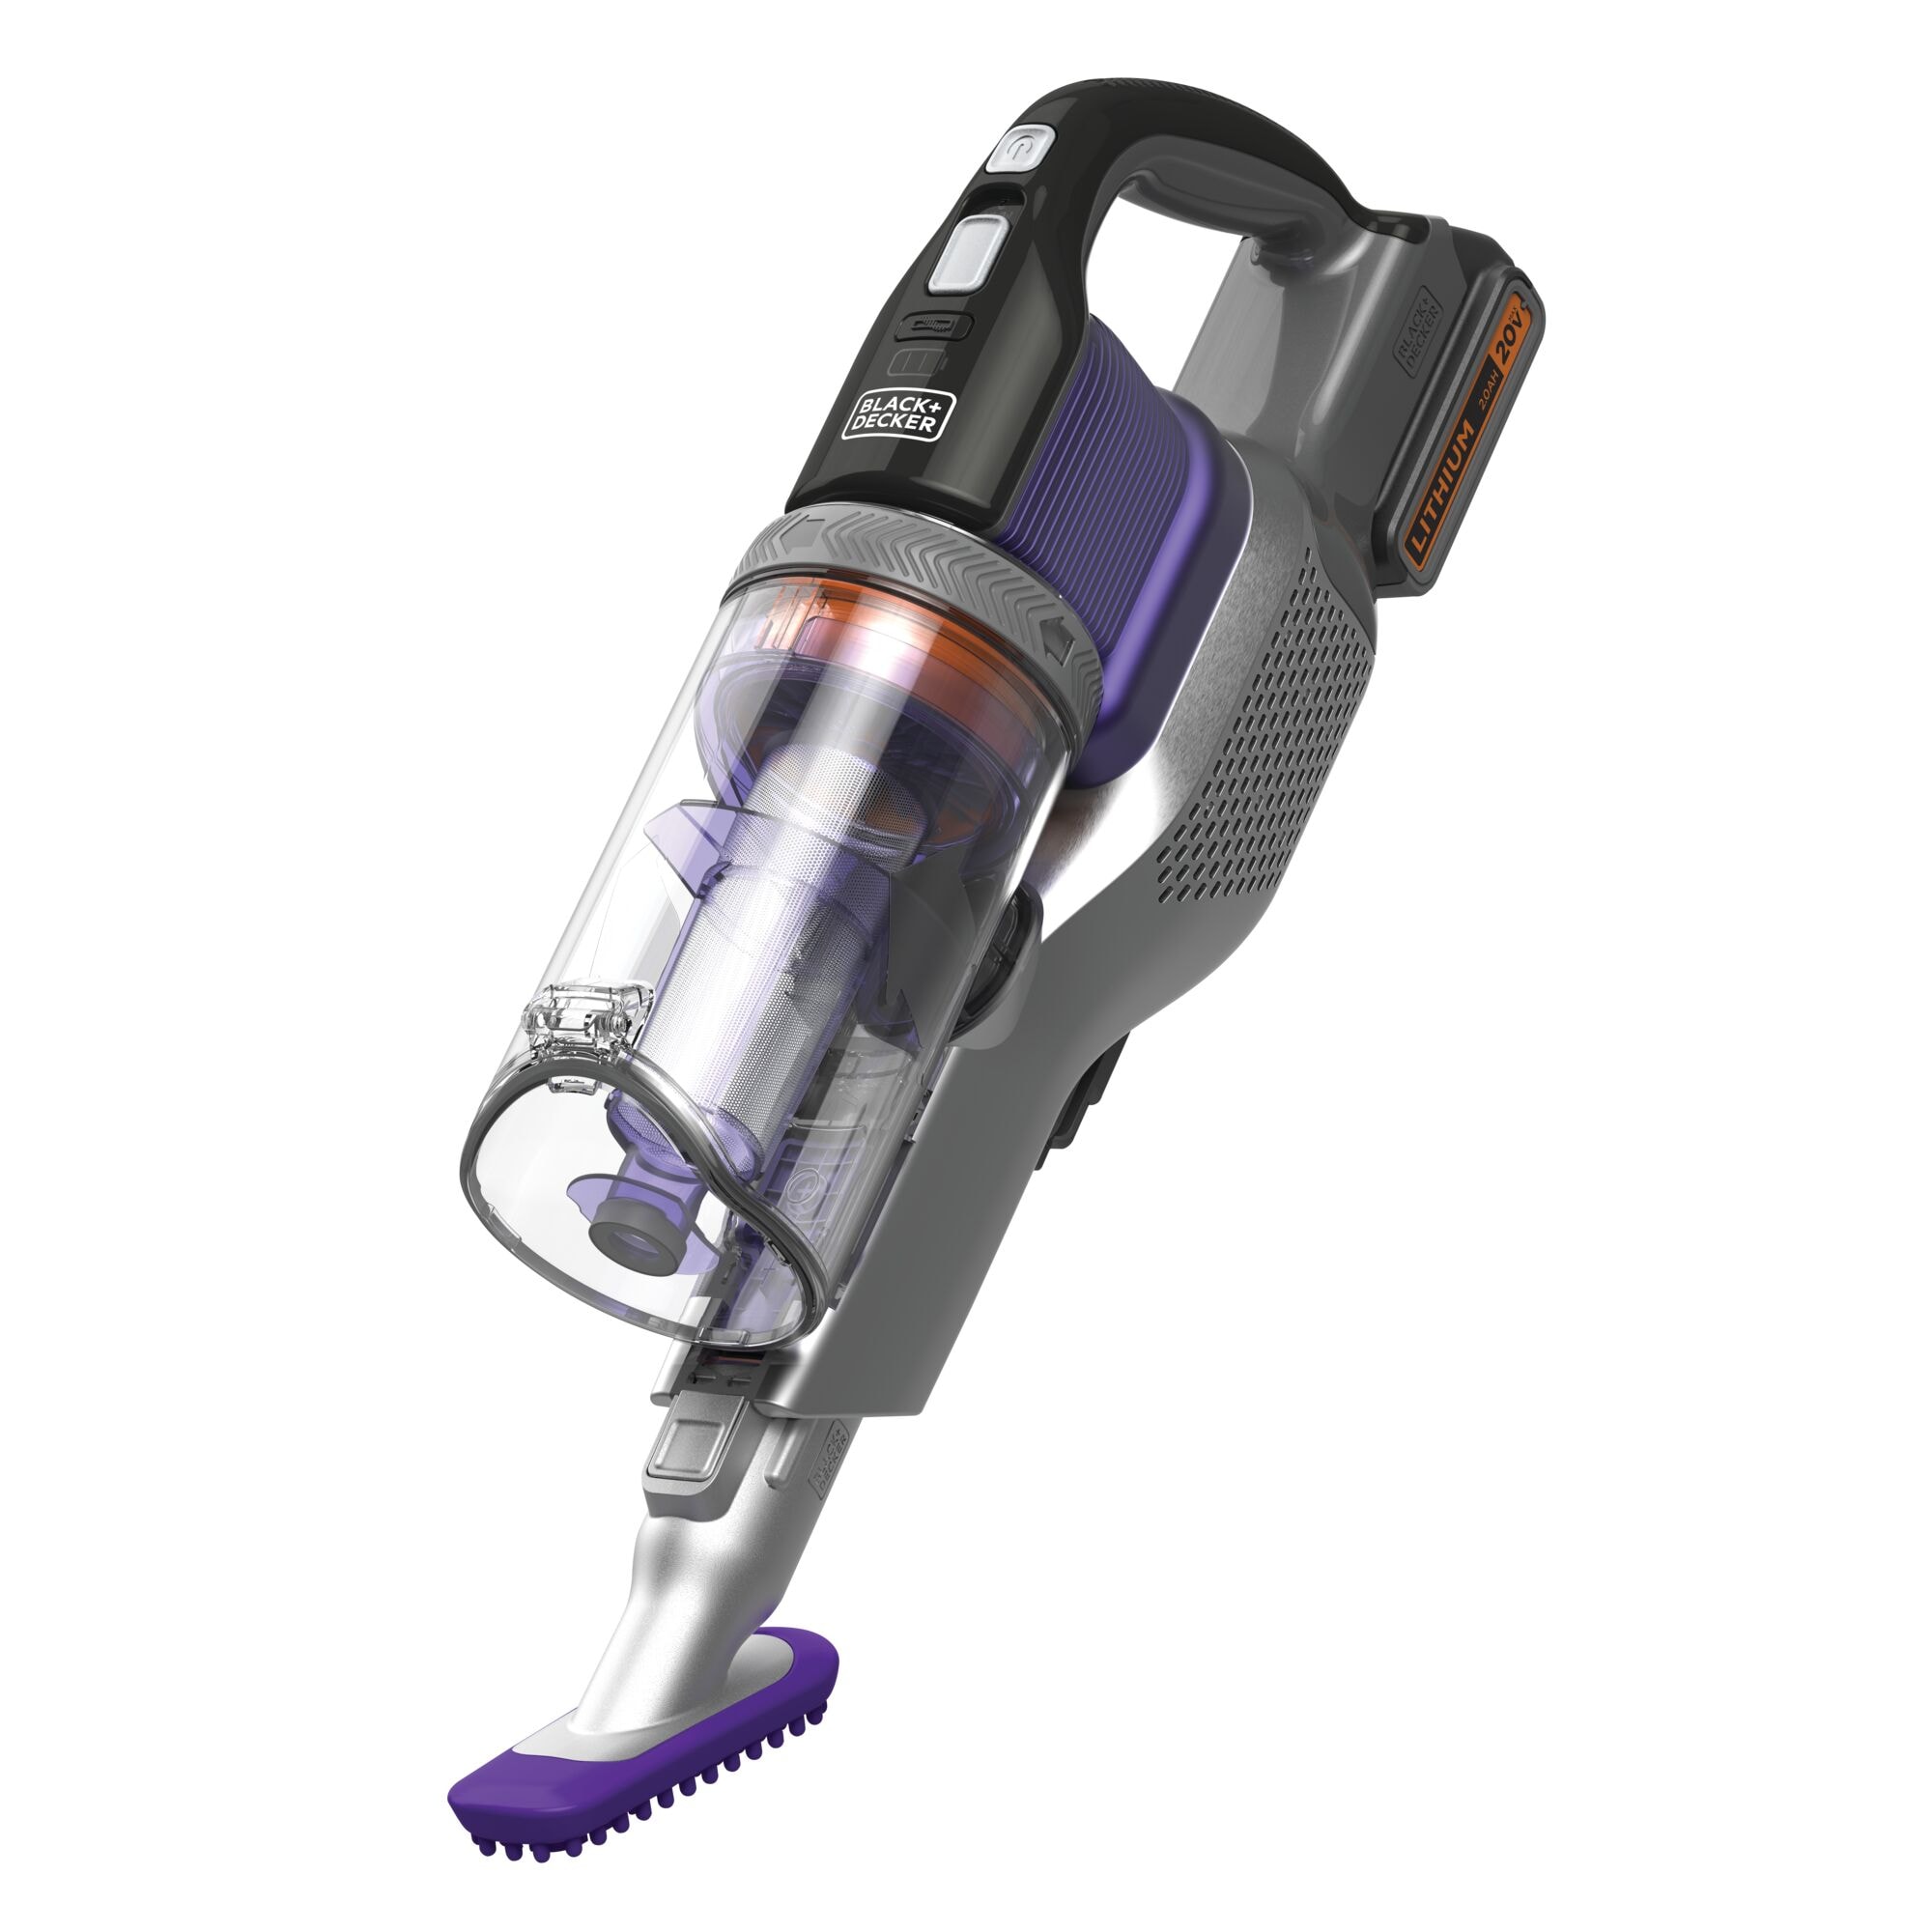 POWERSERIES™ Extreme™ Cordless Stick Vacuum Cleaner | BLACK+DECKER